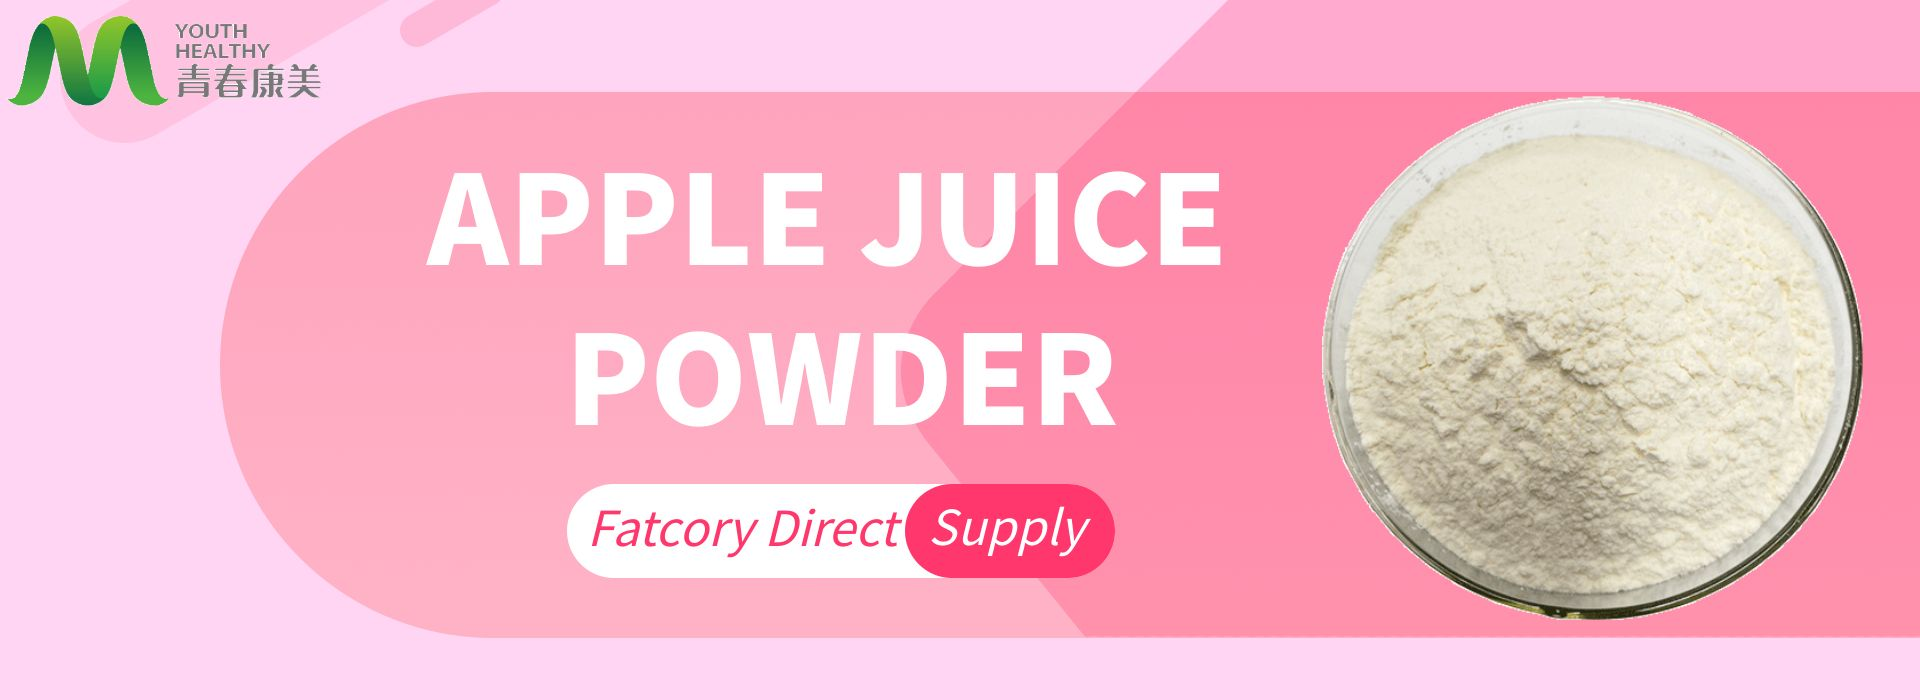 1.Apple Juice Powder